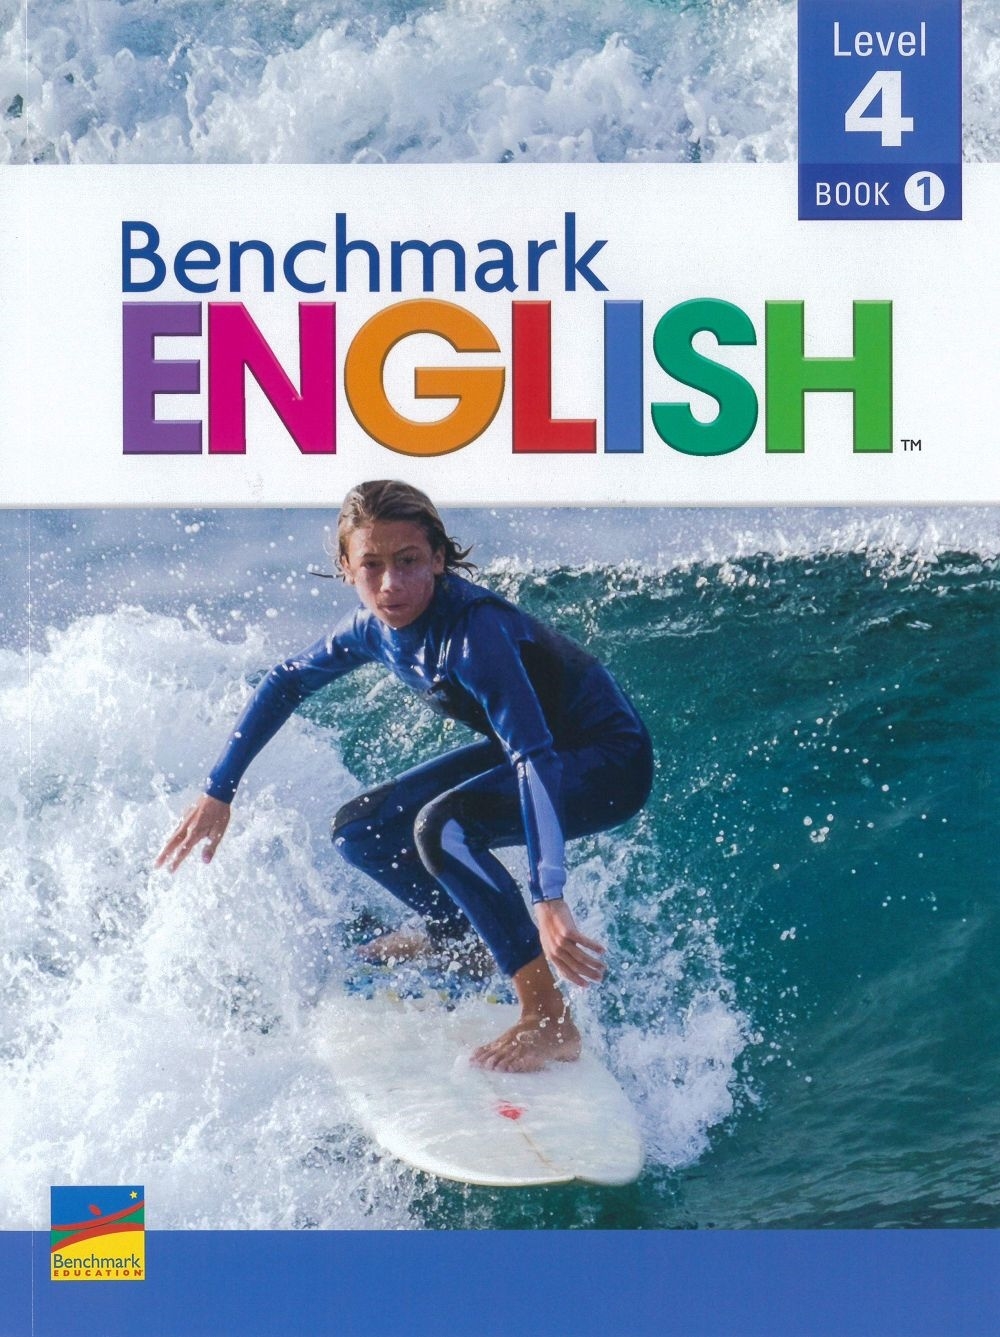 Benchmark English (4) Module 1 Student Book